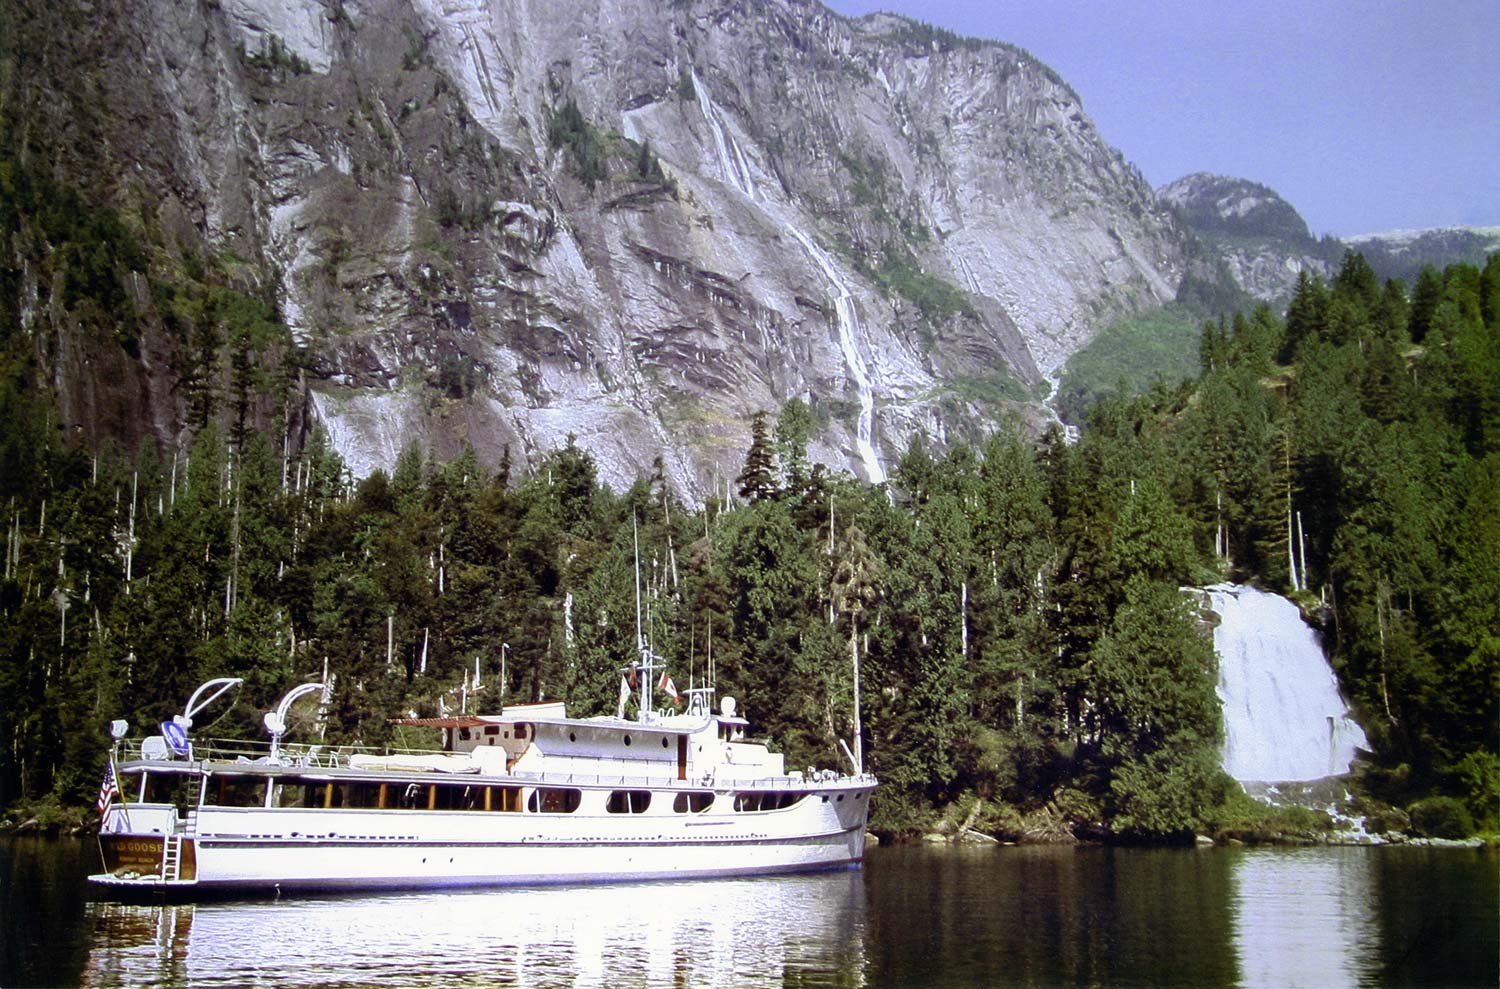 The Wild Goose anchored in the Pacific Northwest. Photo courtesy of John Wayne Enterprises